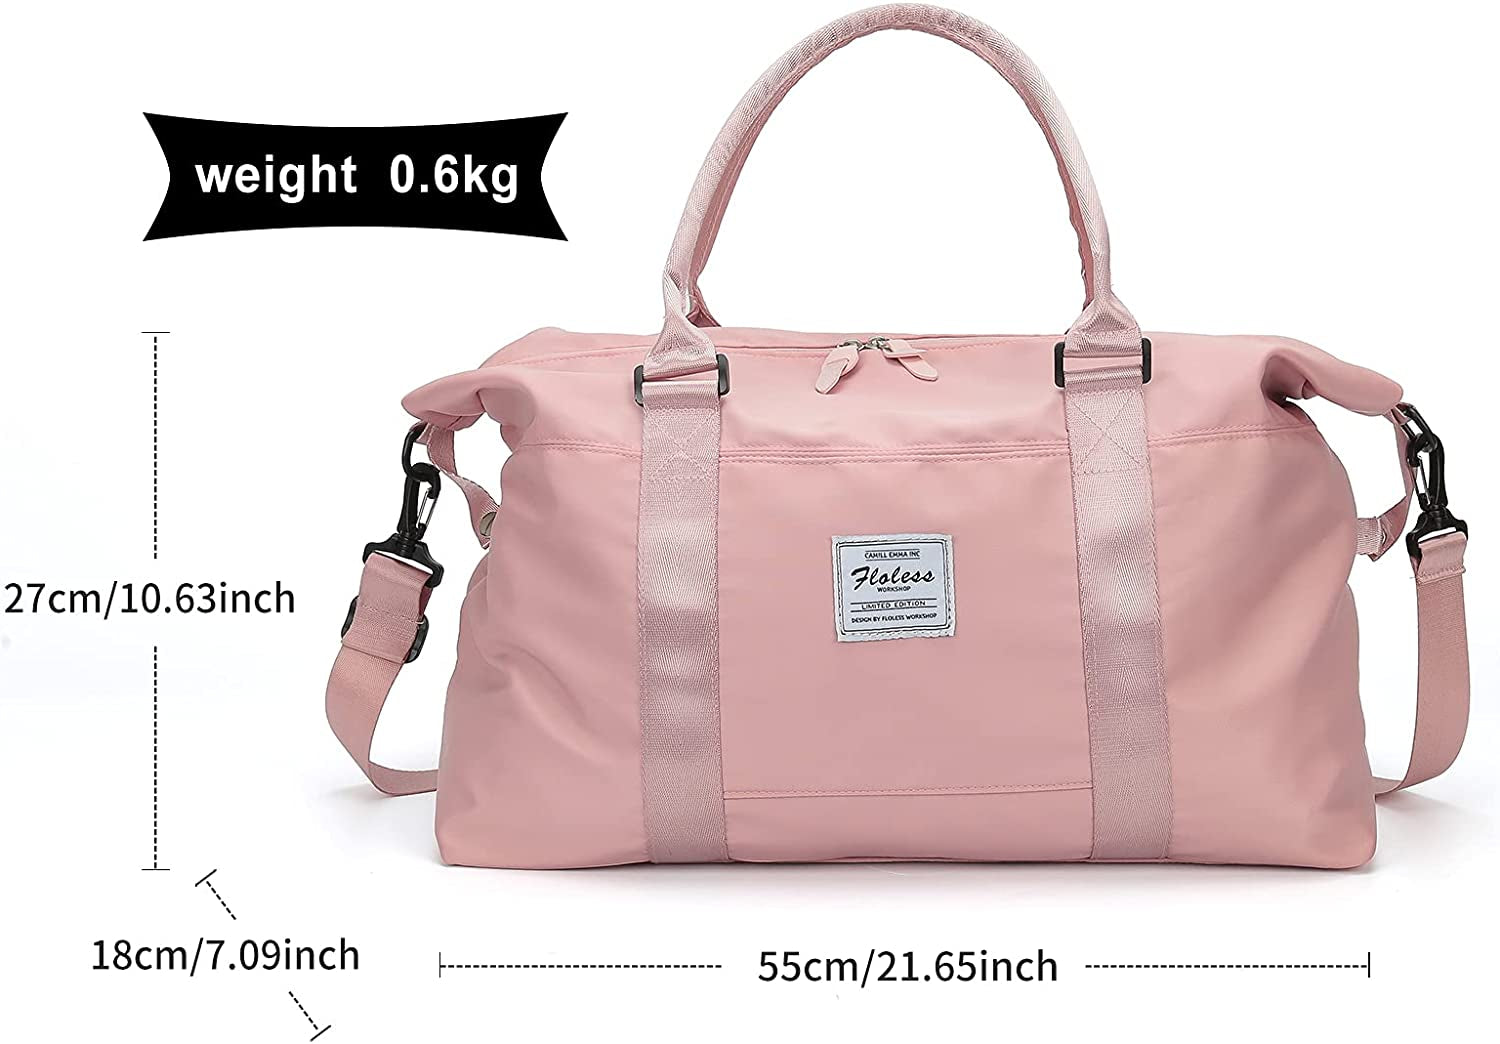 HYC00 Travel Duffel Bag - Large Capacity, Water-Resistant, Multi-Pocket